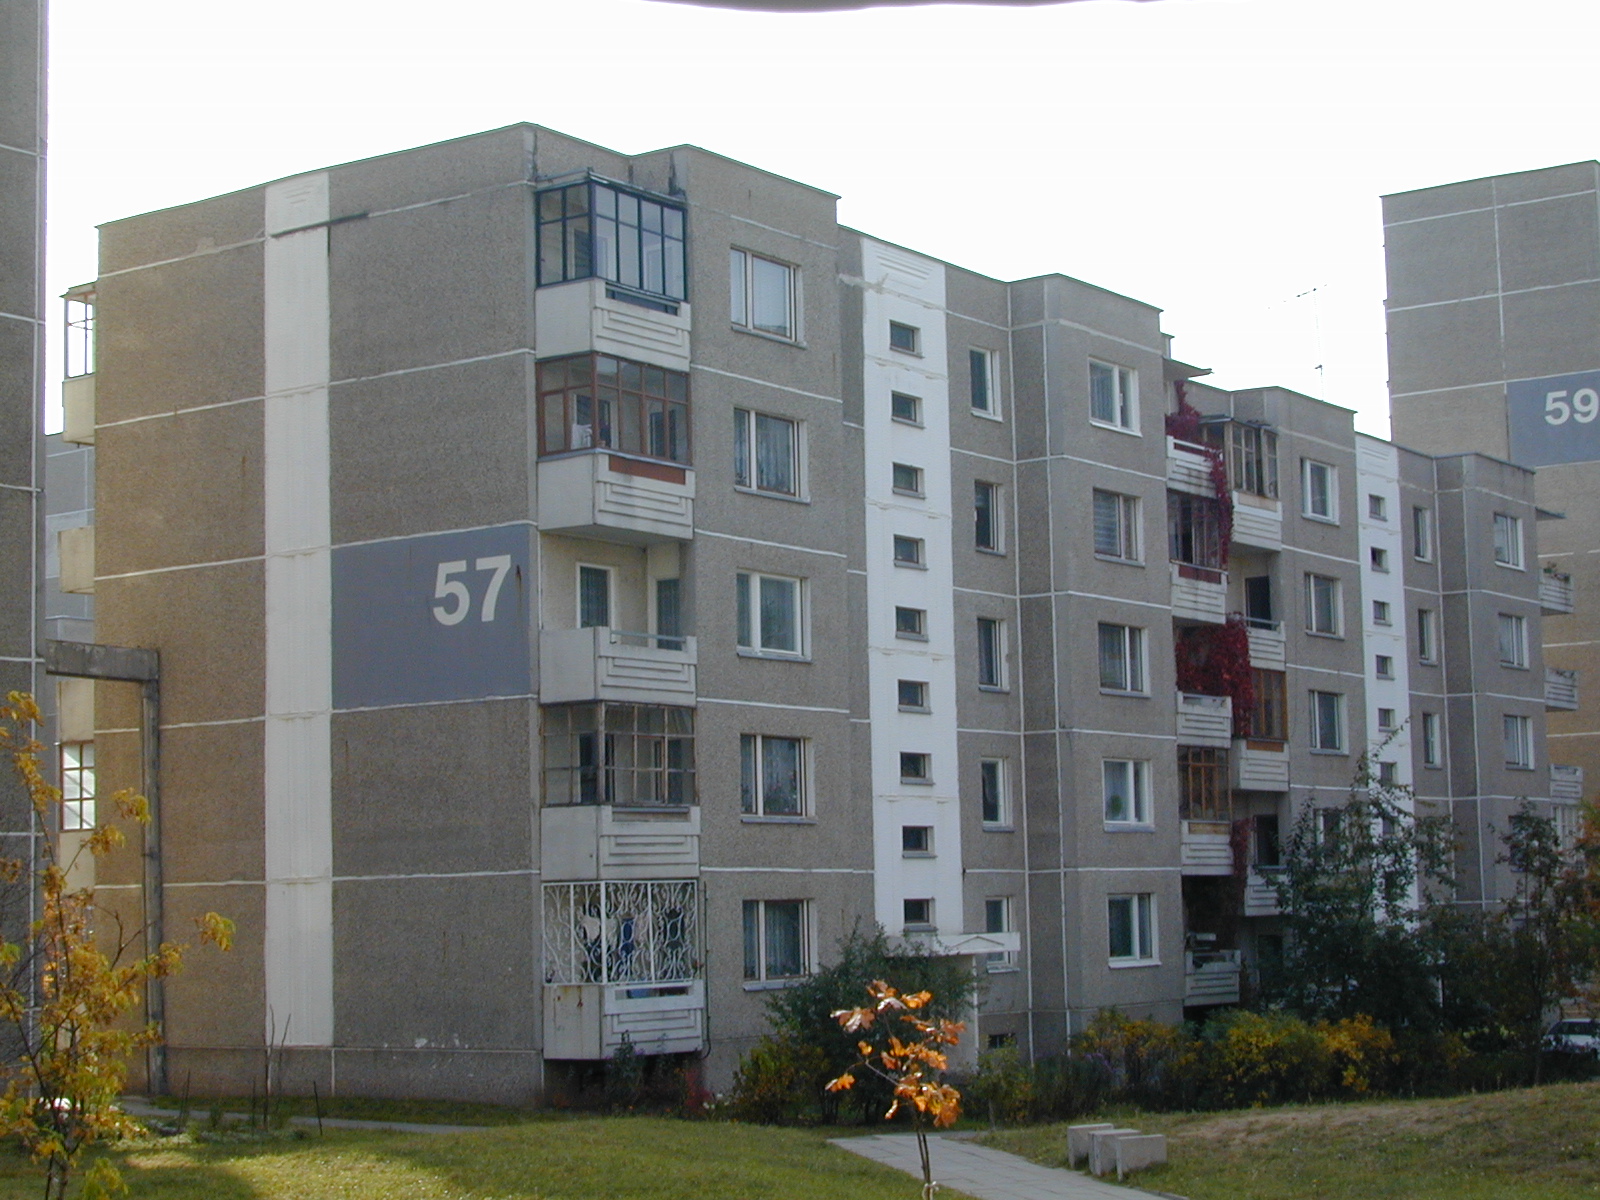 Fabijoniškių g. 57, Vilnius